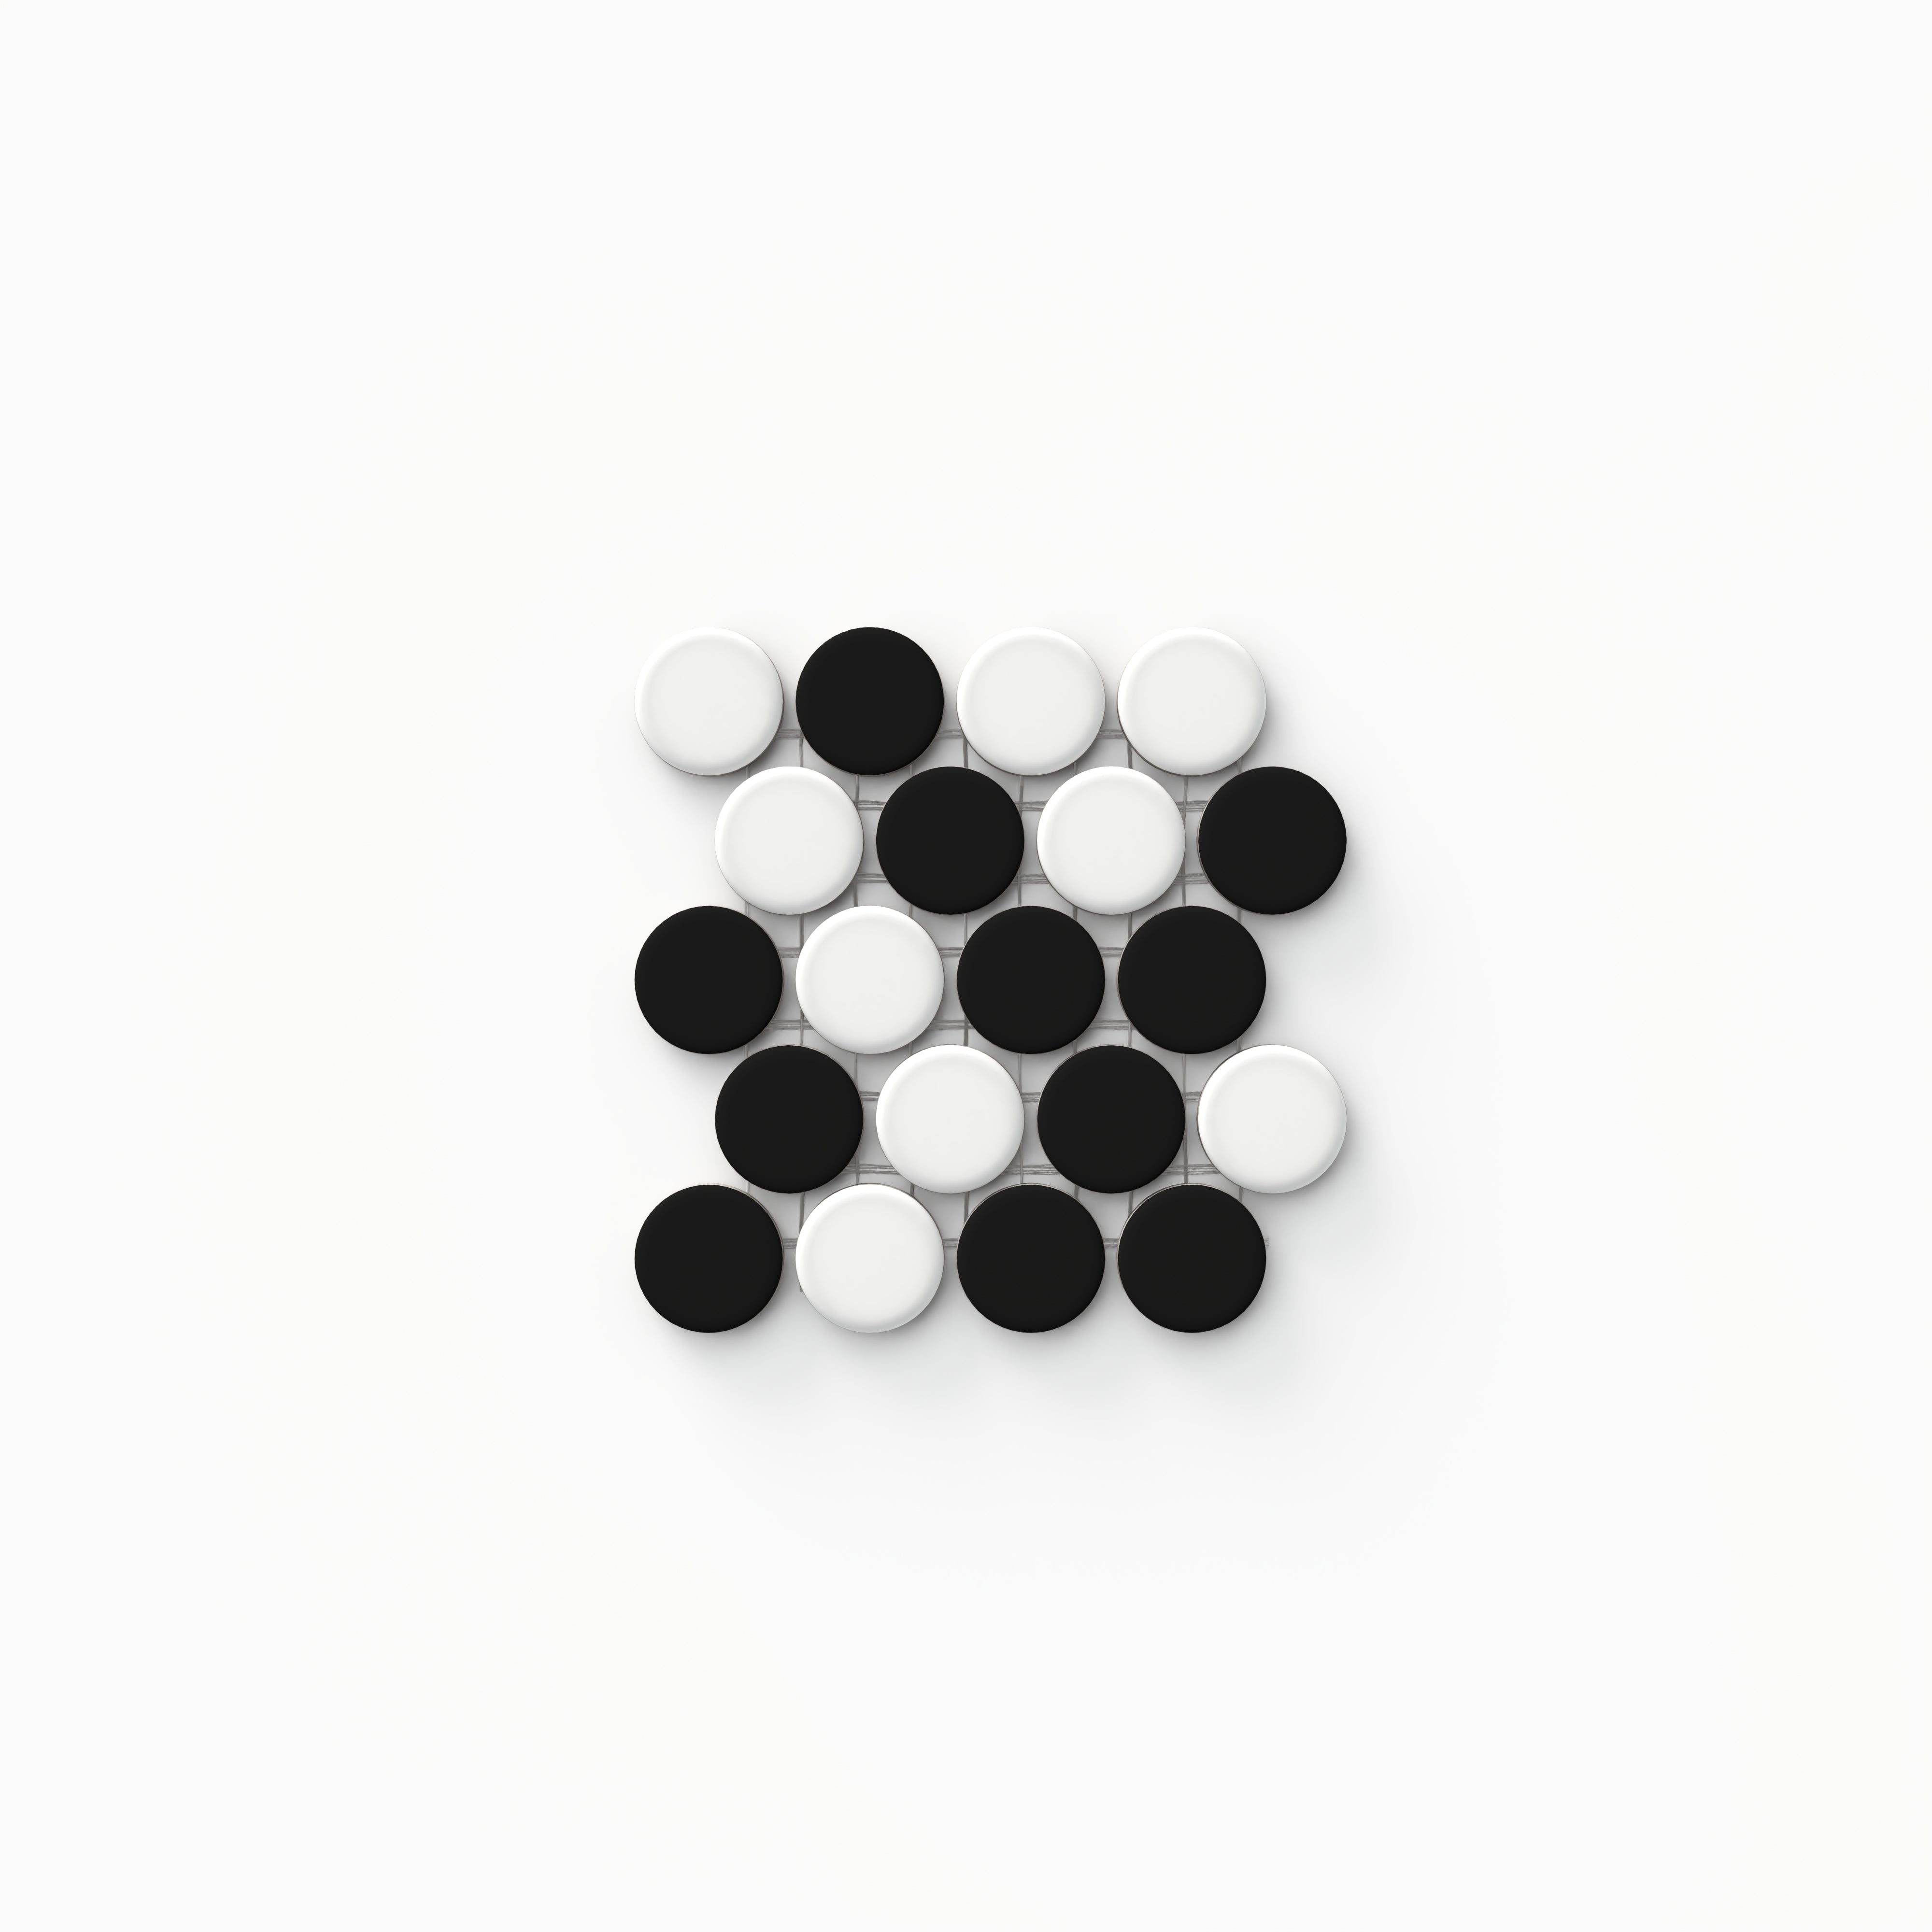 Quinn 10x9 Matte Porcelain Penny Round Mosaic Tile in Black & White Mix Sample